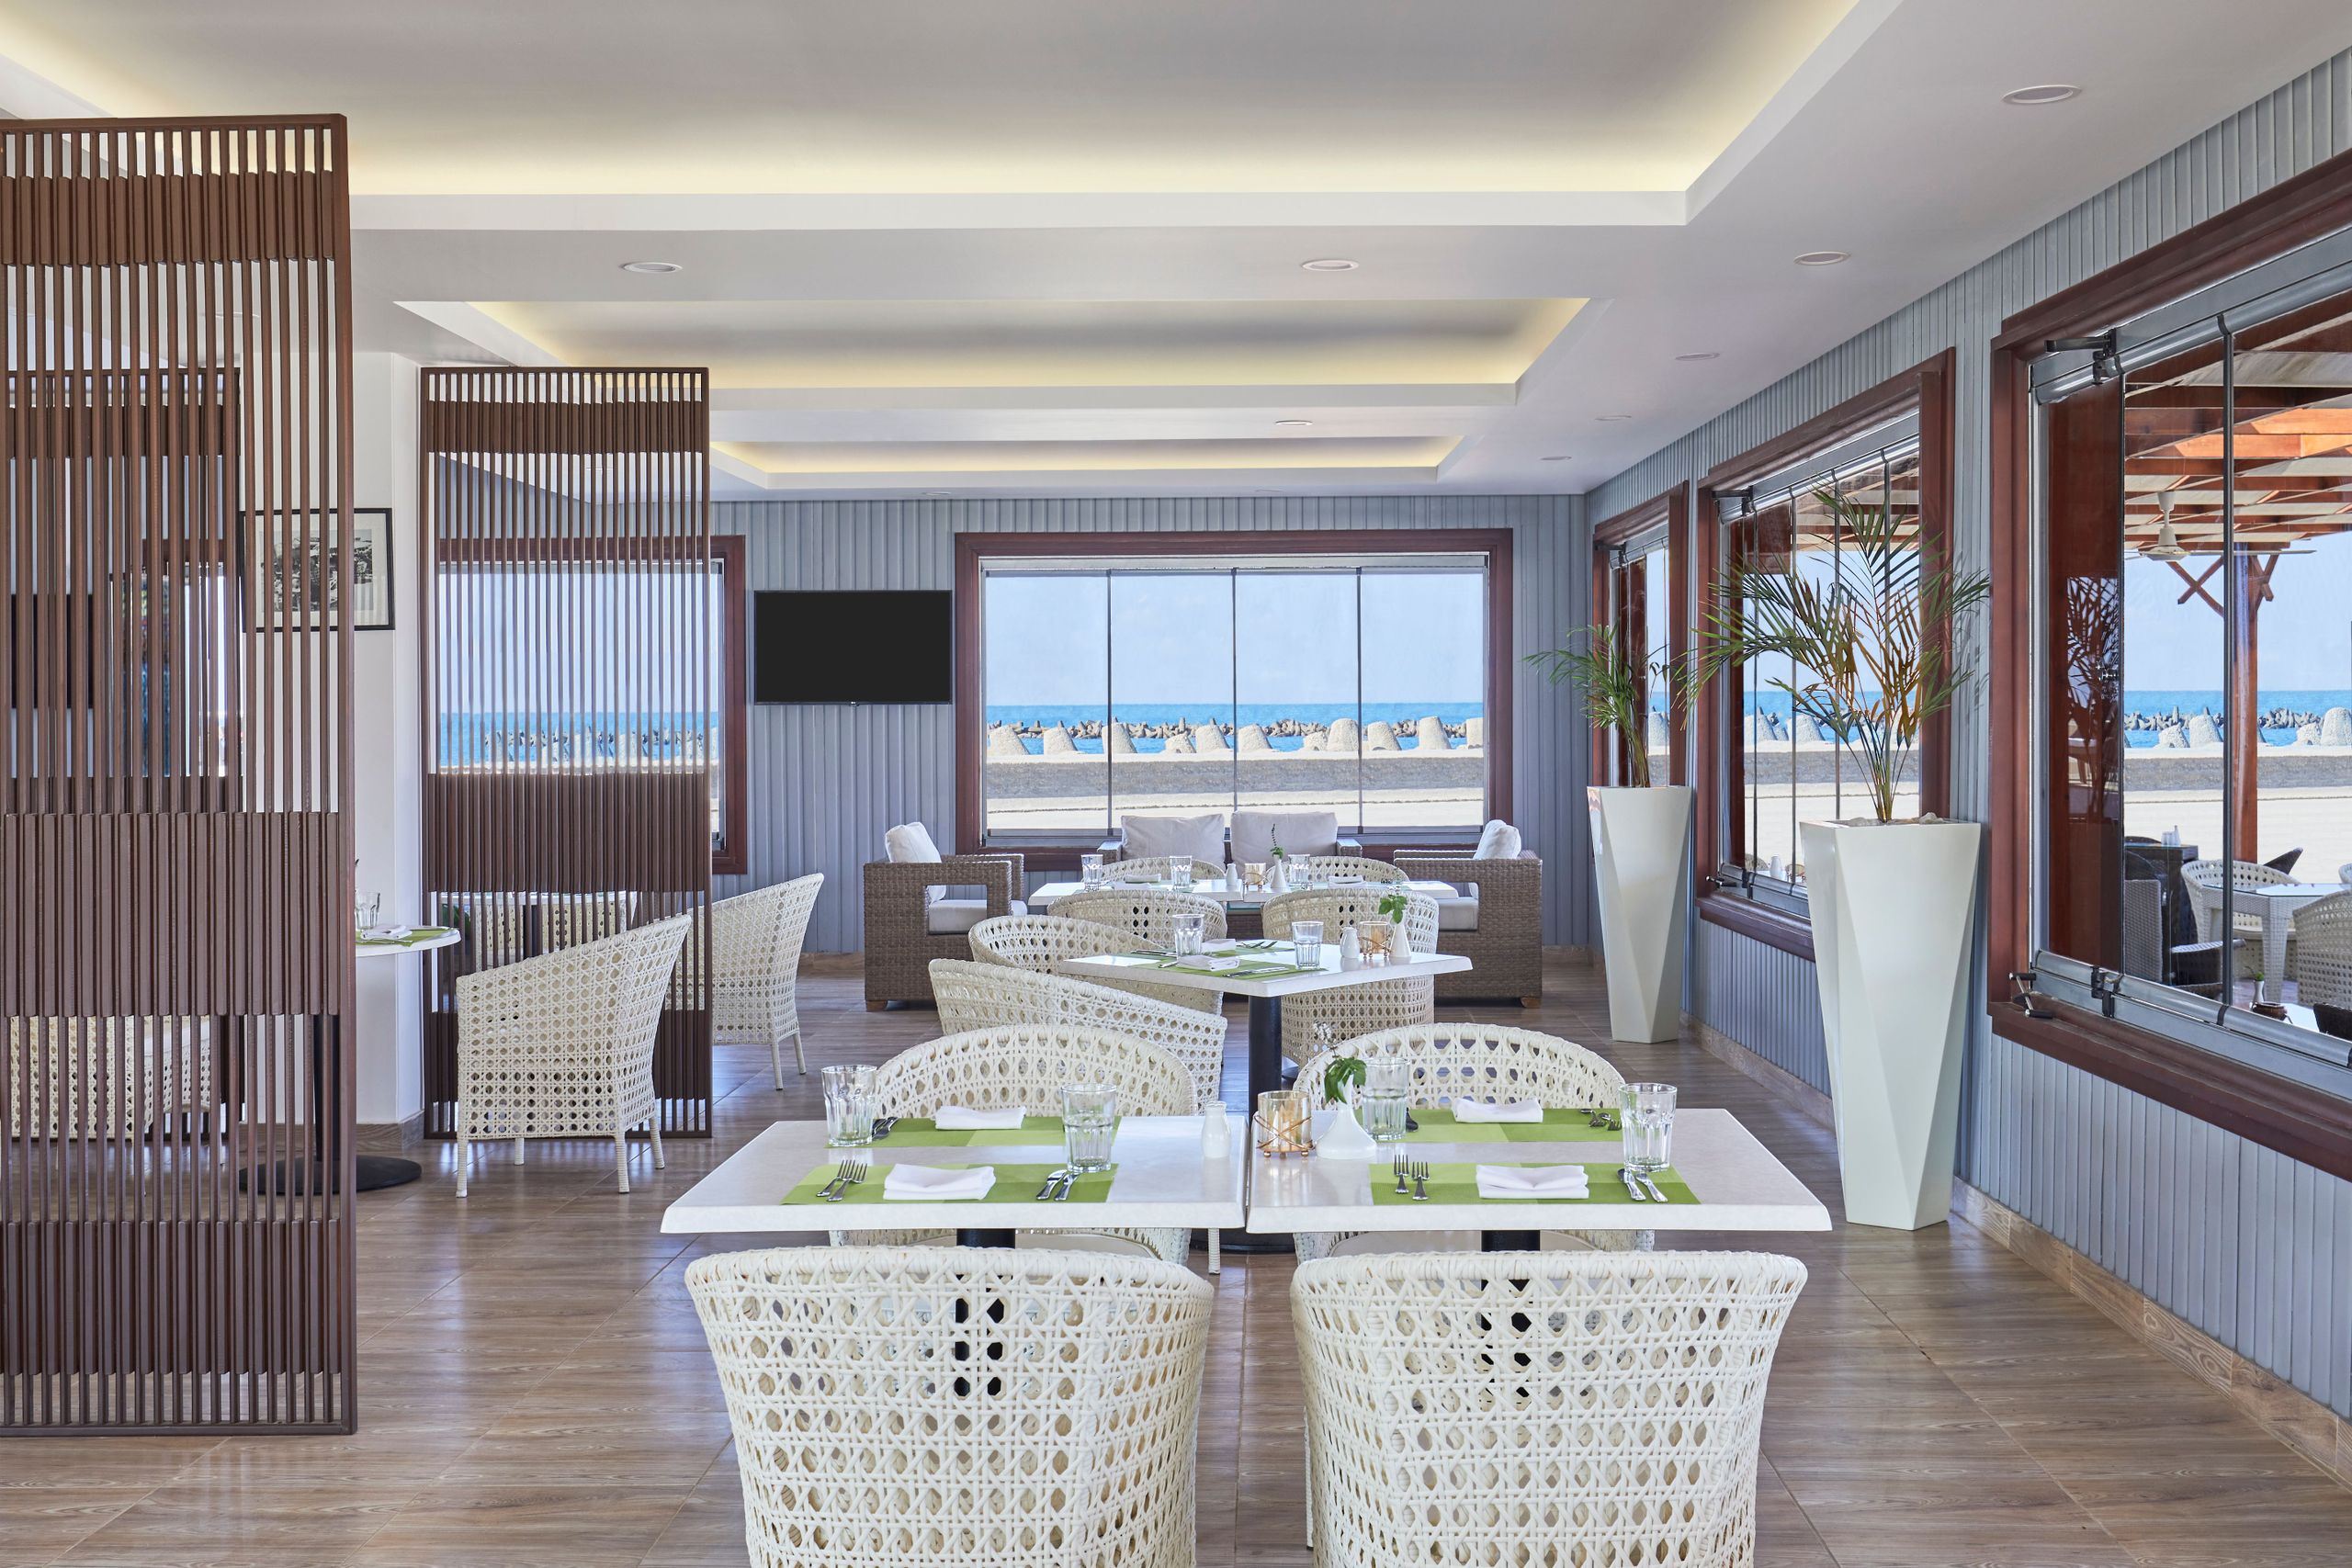 Steigenberger Hotel El Lessan - Ras El Bar - Egypte - Restaurant de plage